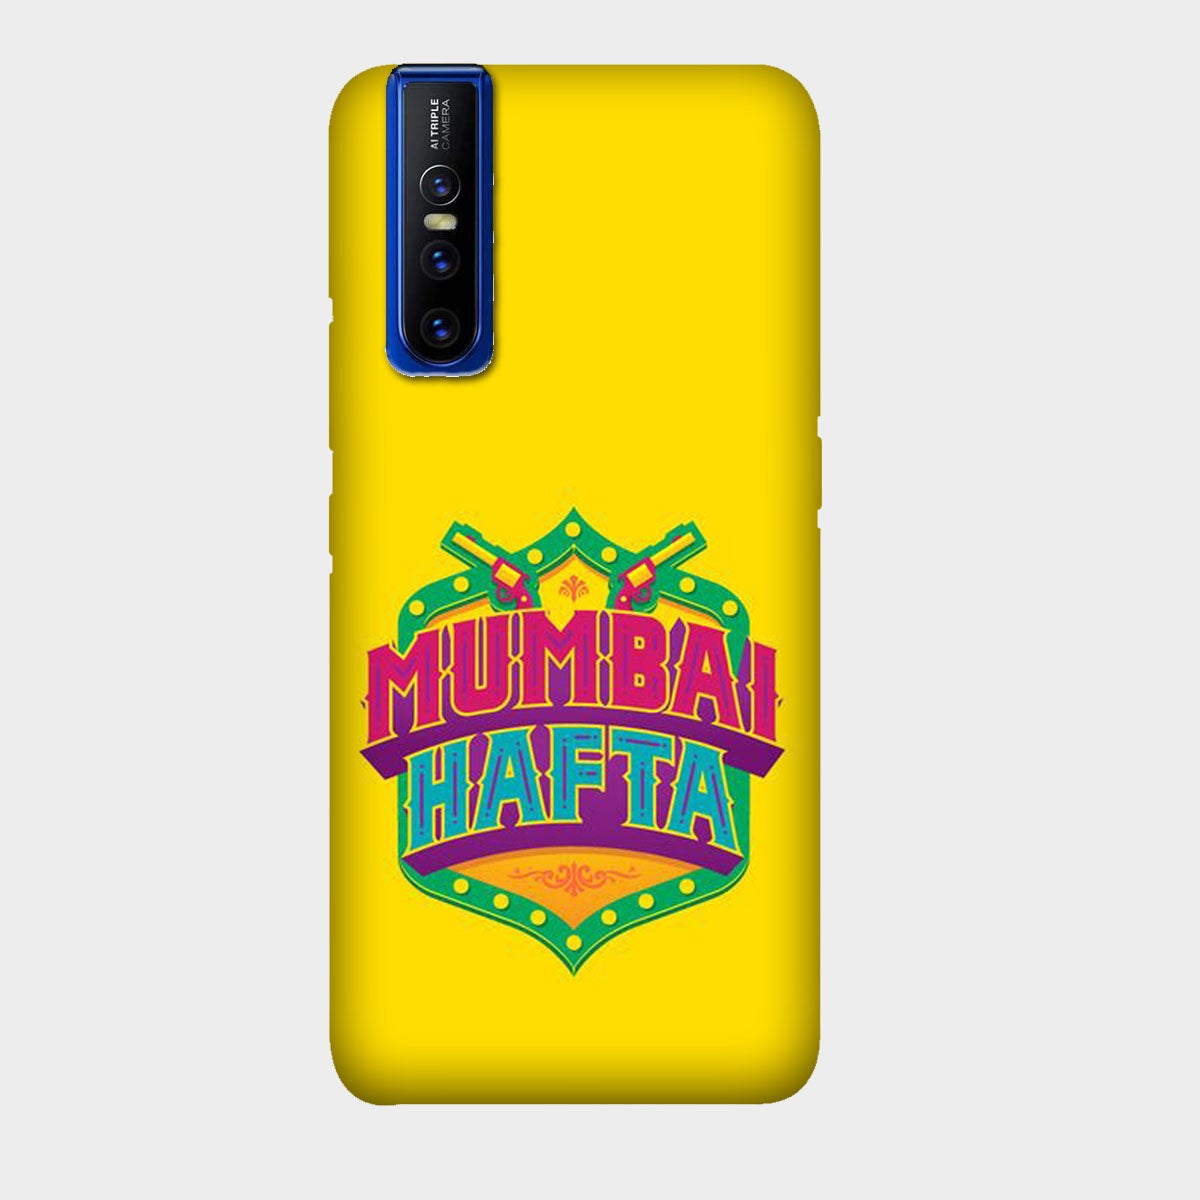 Mumbai Hafta - Mobile Phone Cover - Hard Case - Vivo